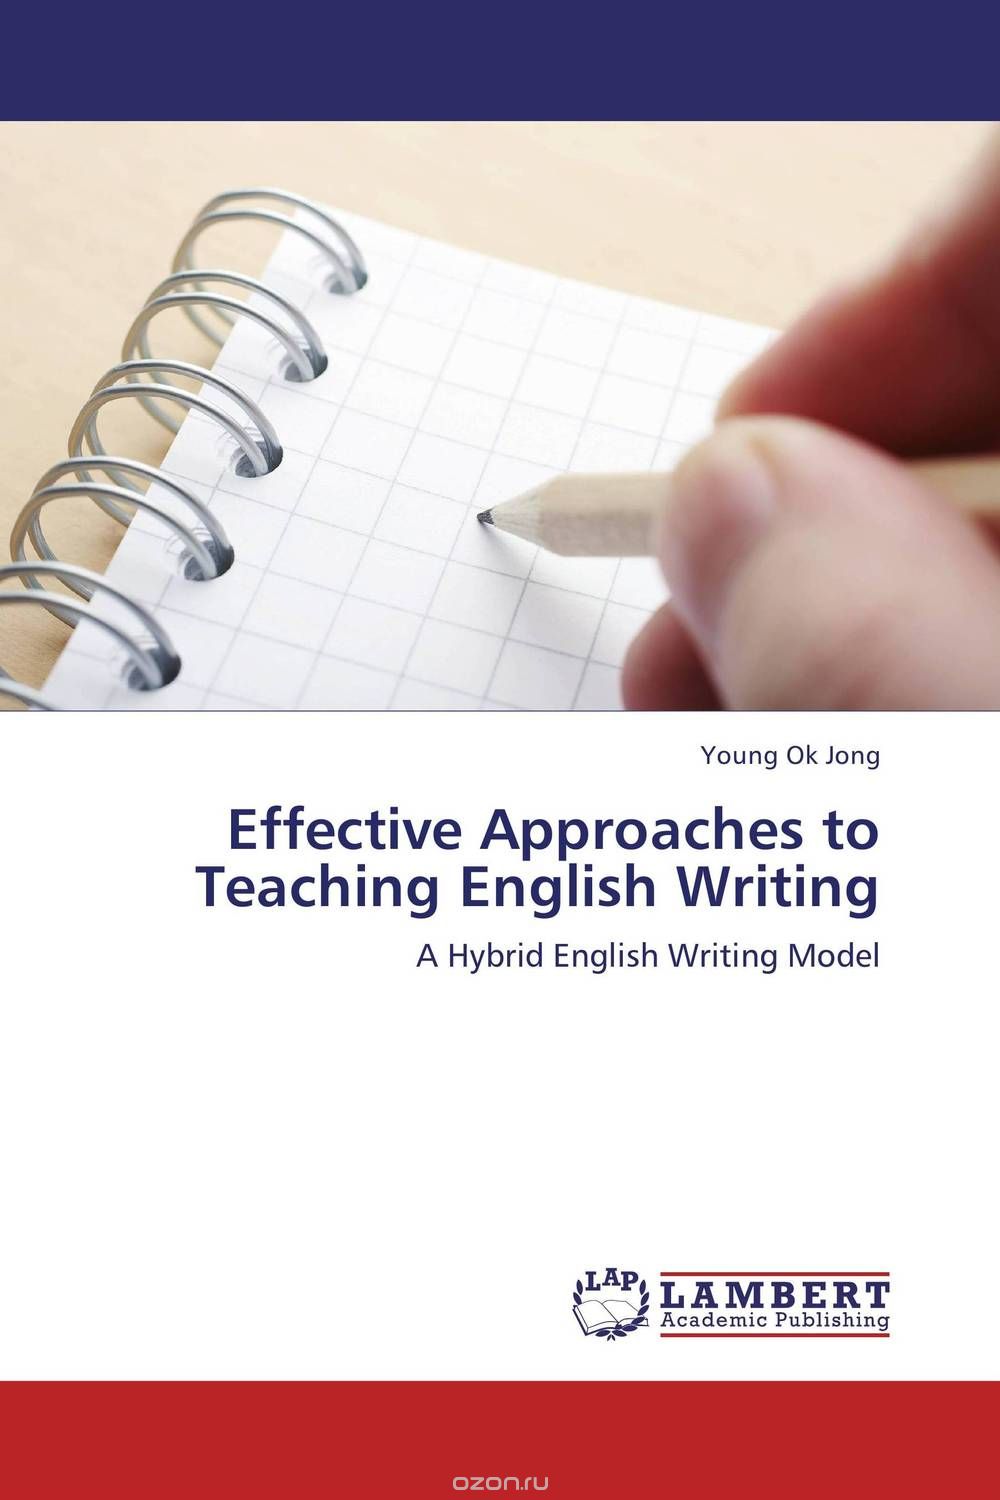 Скачать книгу "Effective Approaches to Teaching English Writing"